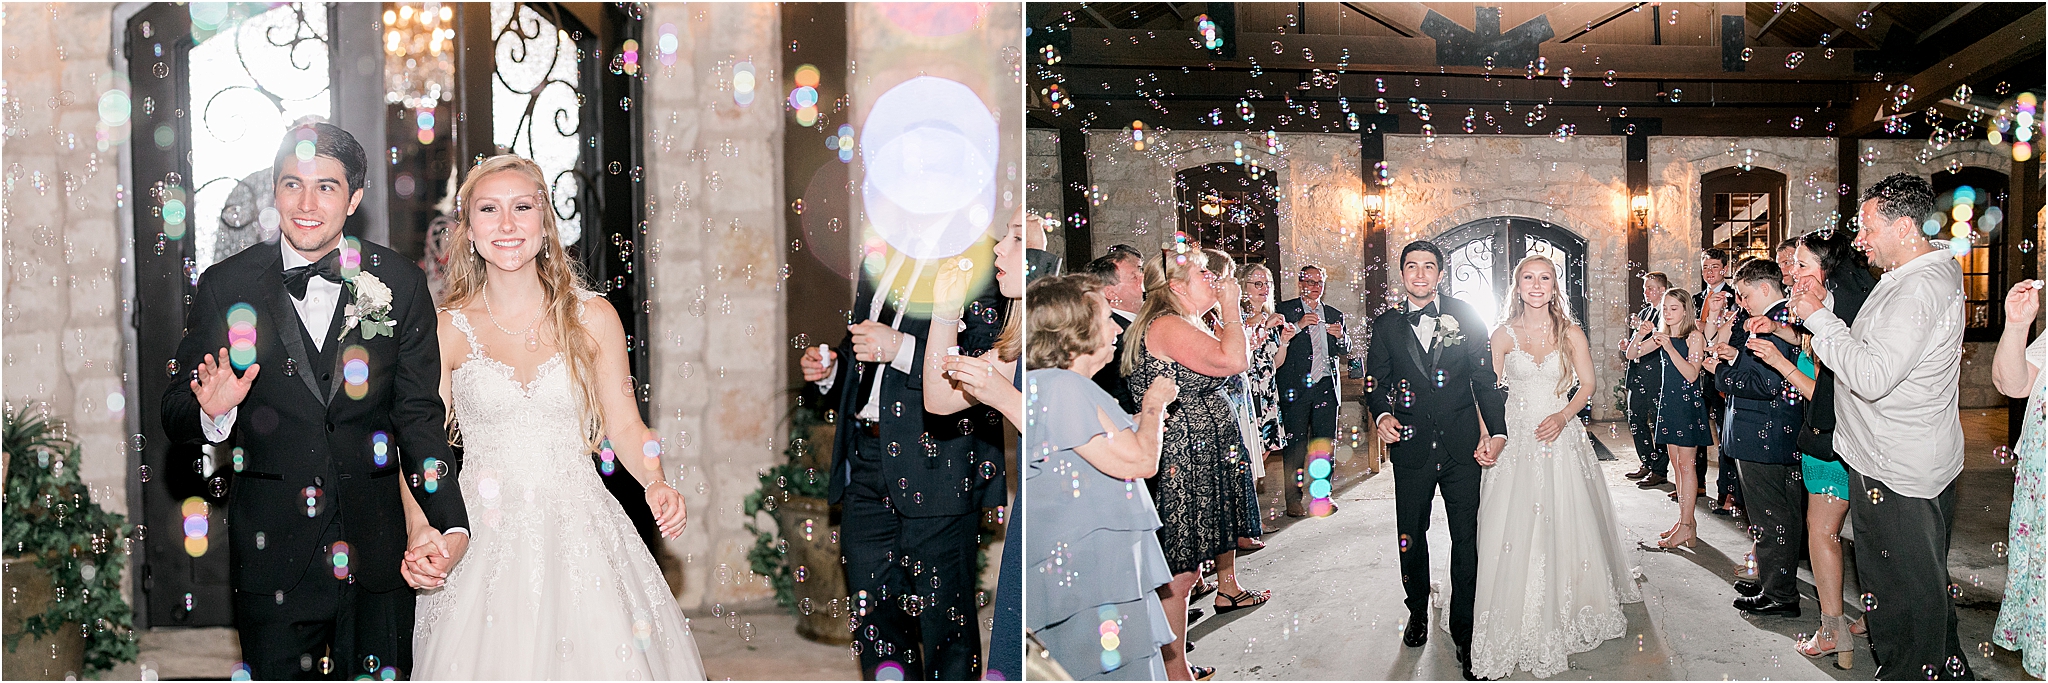 Bubble Sendoff at The Springs McKinney by DFW Wedding Photographer Jillian Hogan 